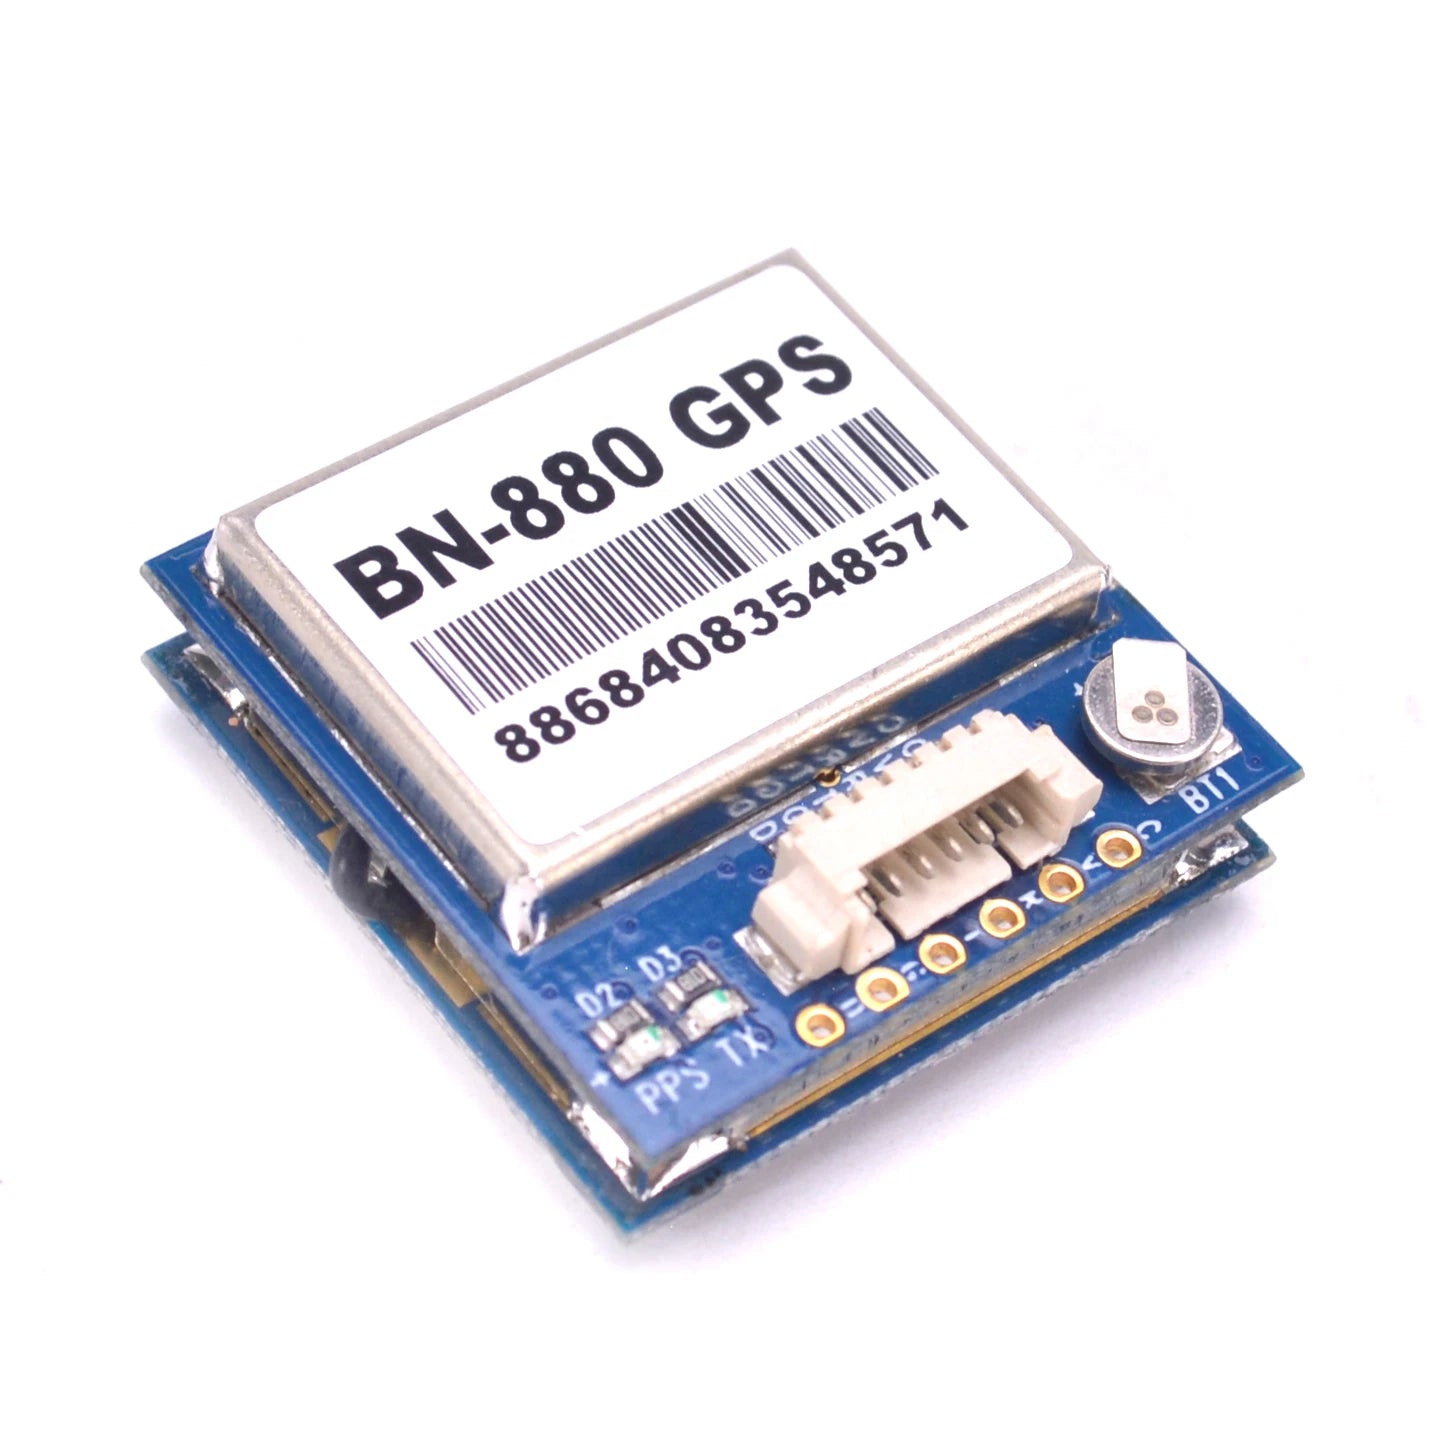 GPS Dual Module for MINI F3 F4, 4 VCC I DC 3.6V - 5.5V supply input,Typical: 